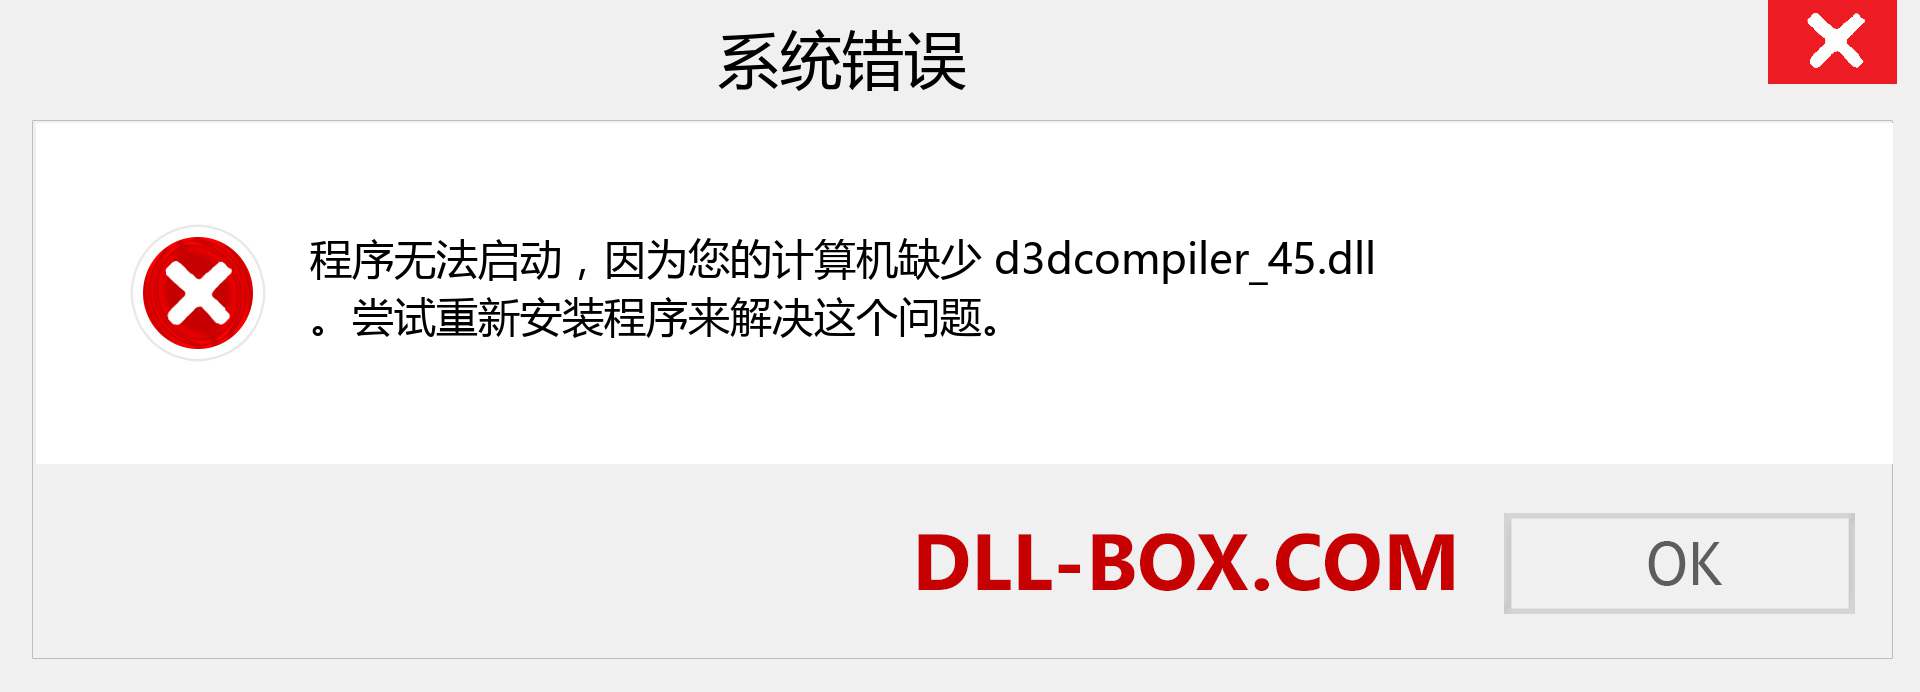 d3dcompiler_45.dll 文件丢失？。 适用于 Windows 7、8、10 的下载 - 修复 Windows、照片、图像上的 d3dcompiler_45 dll 丢失错误